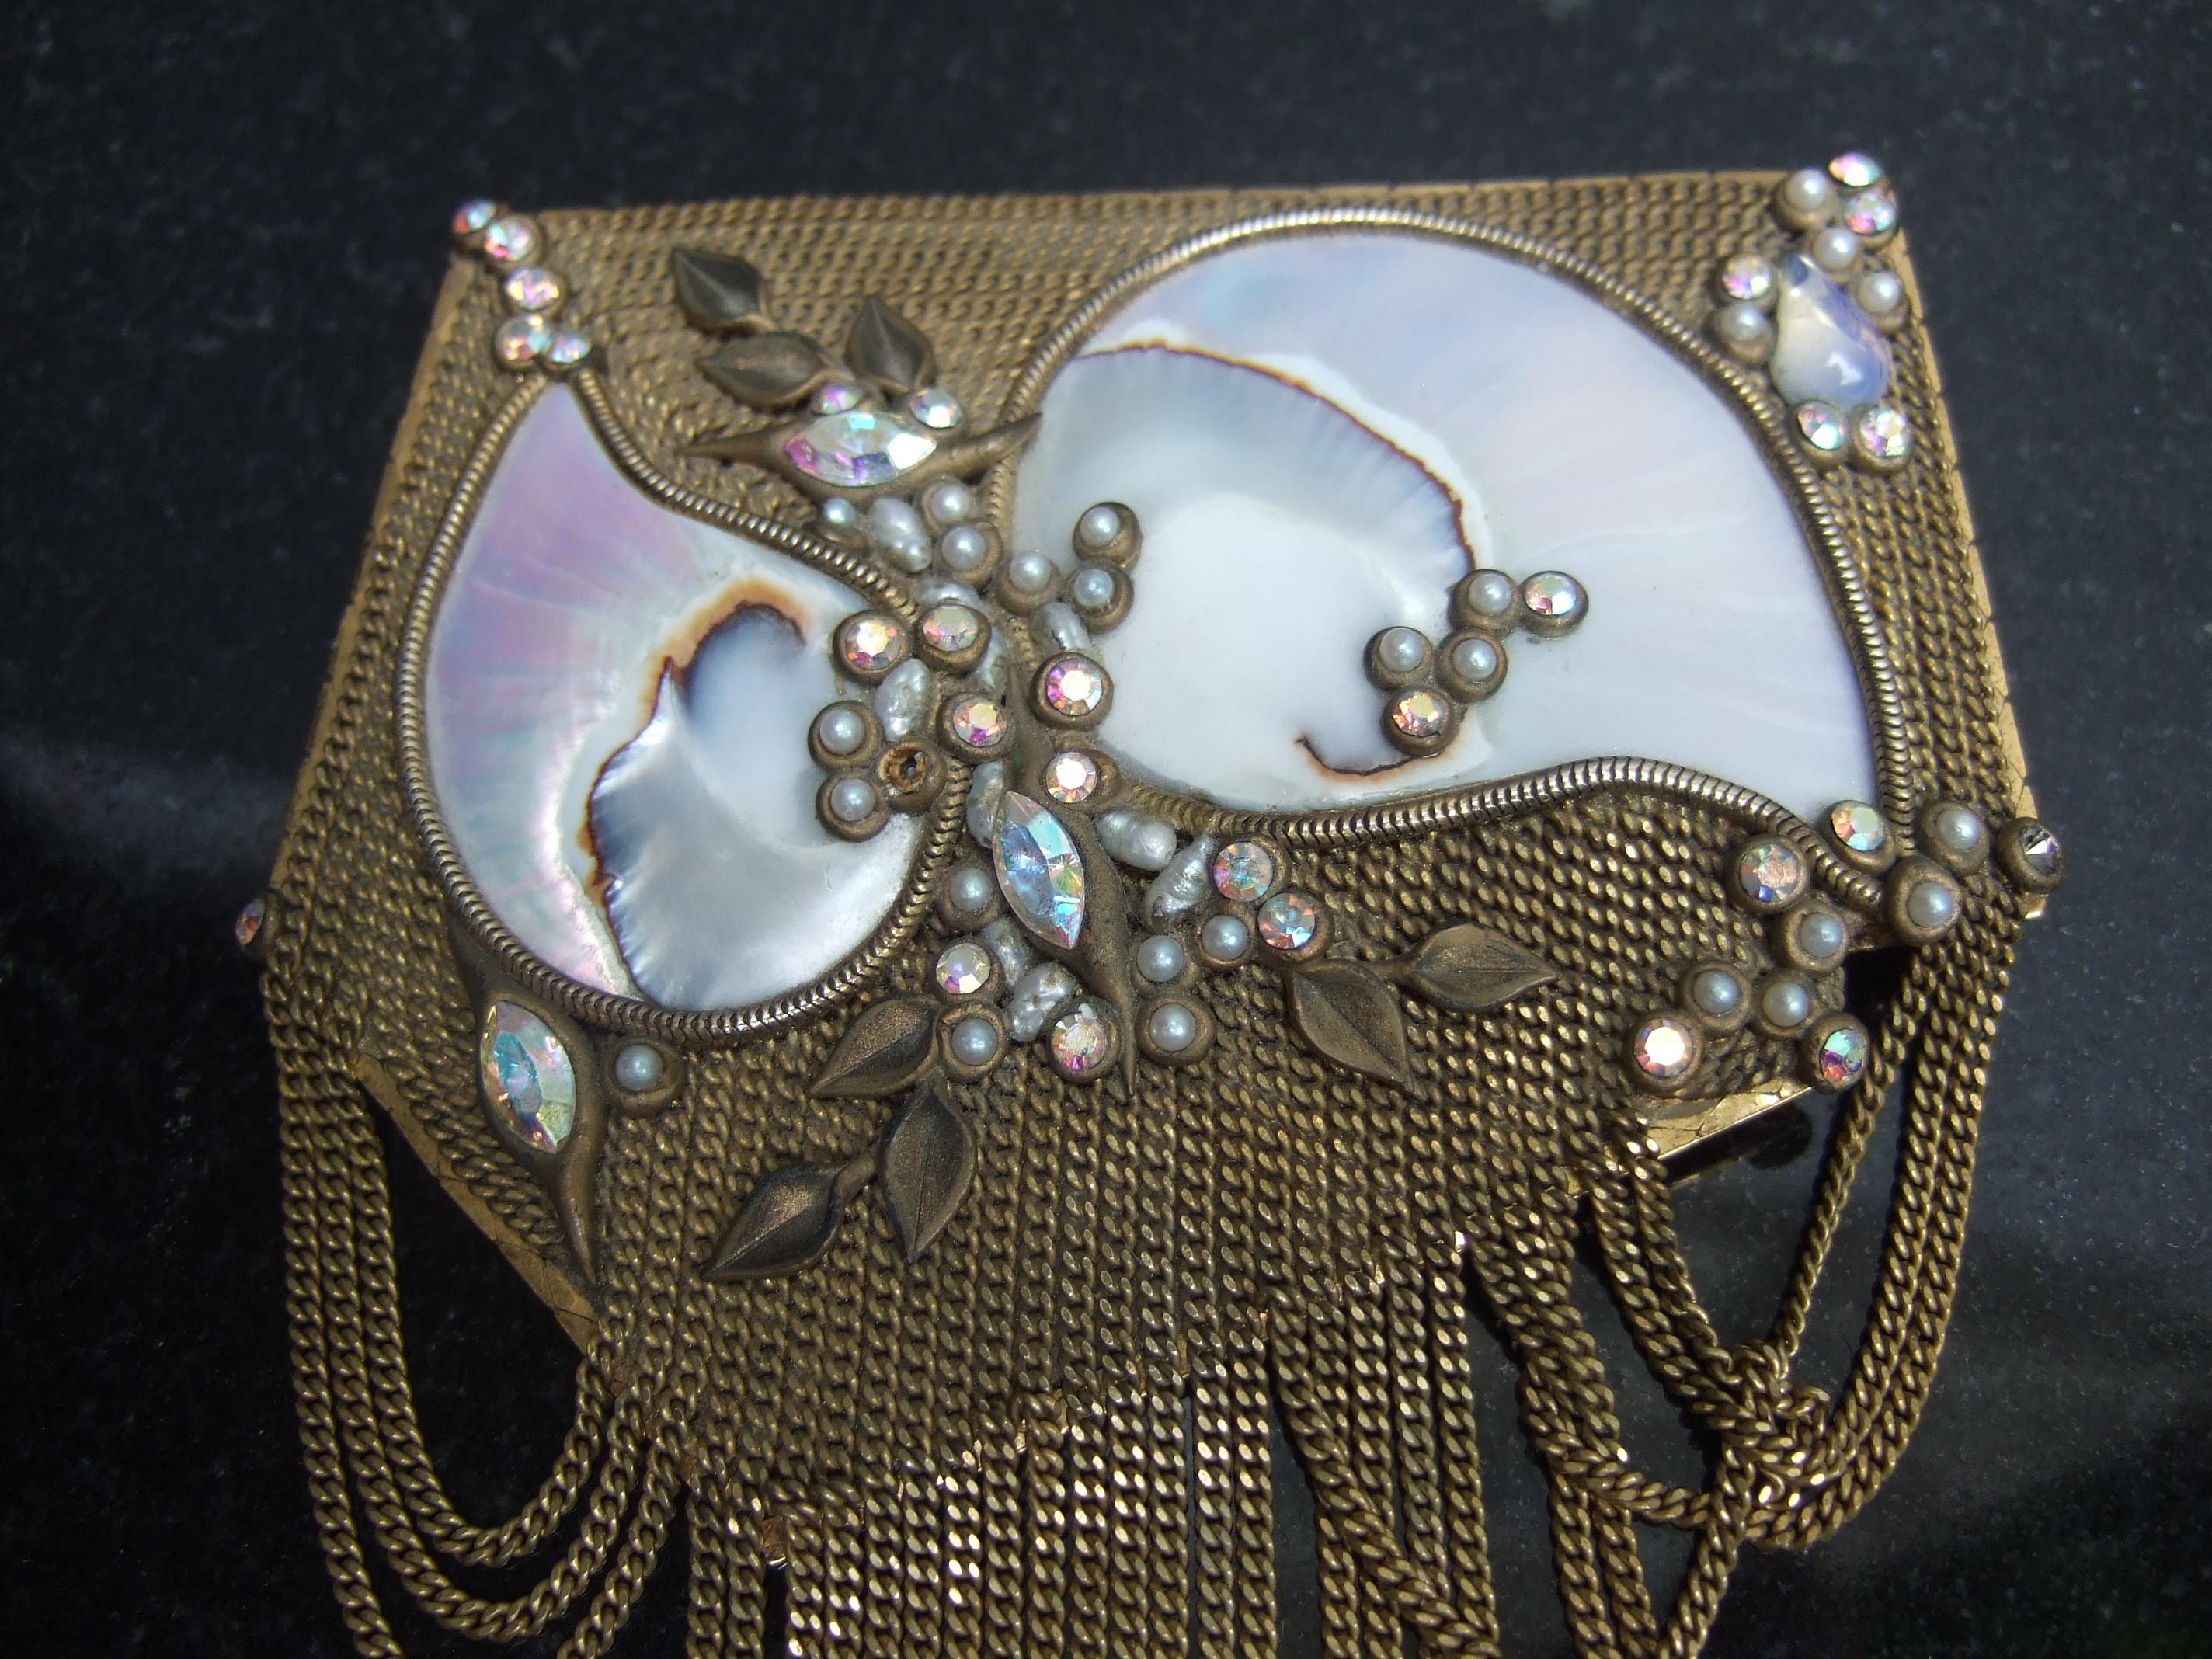  Mother of Pearl Jeweled Artisan Massive Gilt Metal Tassel Brooch c 1970s For Sale 2